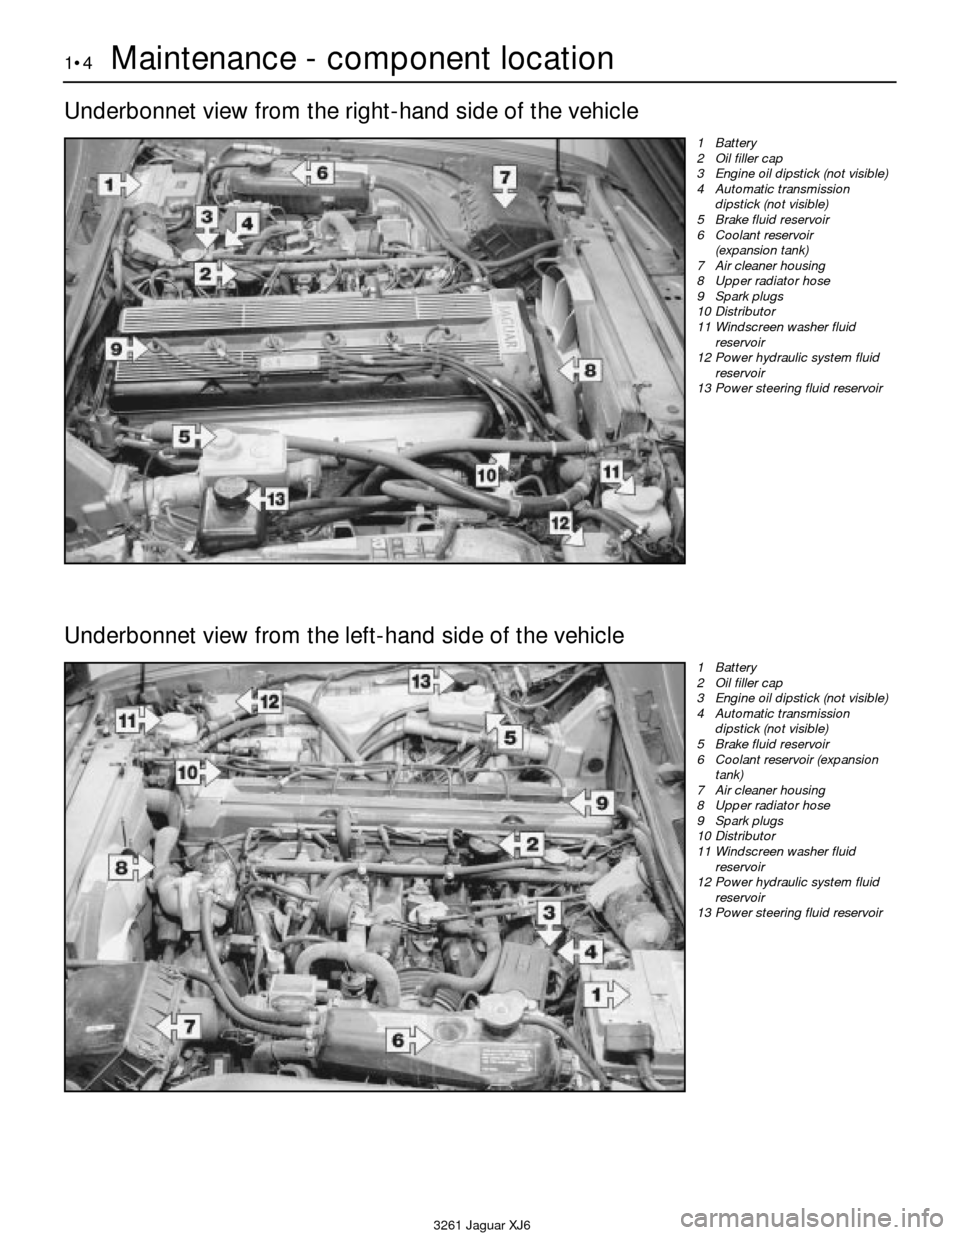 JAGUAR XJ6 1997 2.G Workshop Manual 1•4Maintenance - component location
3261 Jaguar XJ6
1 Battery
2 Oil filler cap
3 Engine oil dipstick (not visible)
4 Automatic transmission
dipstick (not visible)
5 Brake fluid reservoir
6 Coolant r